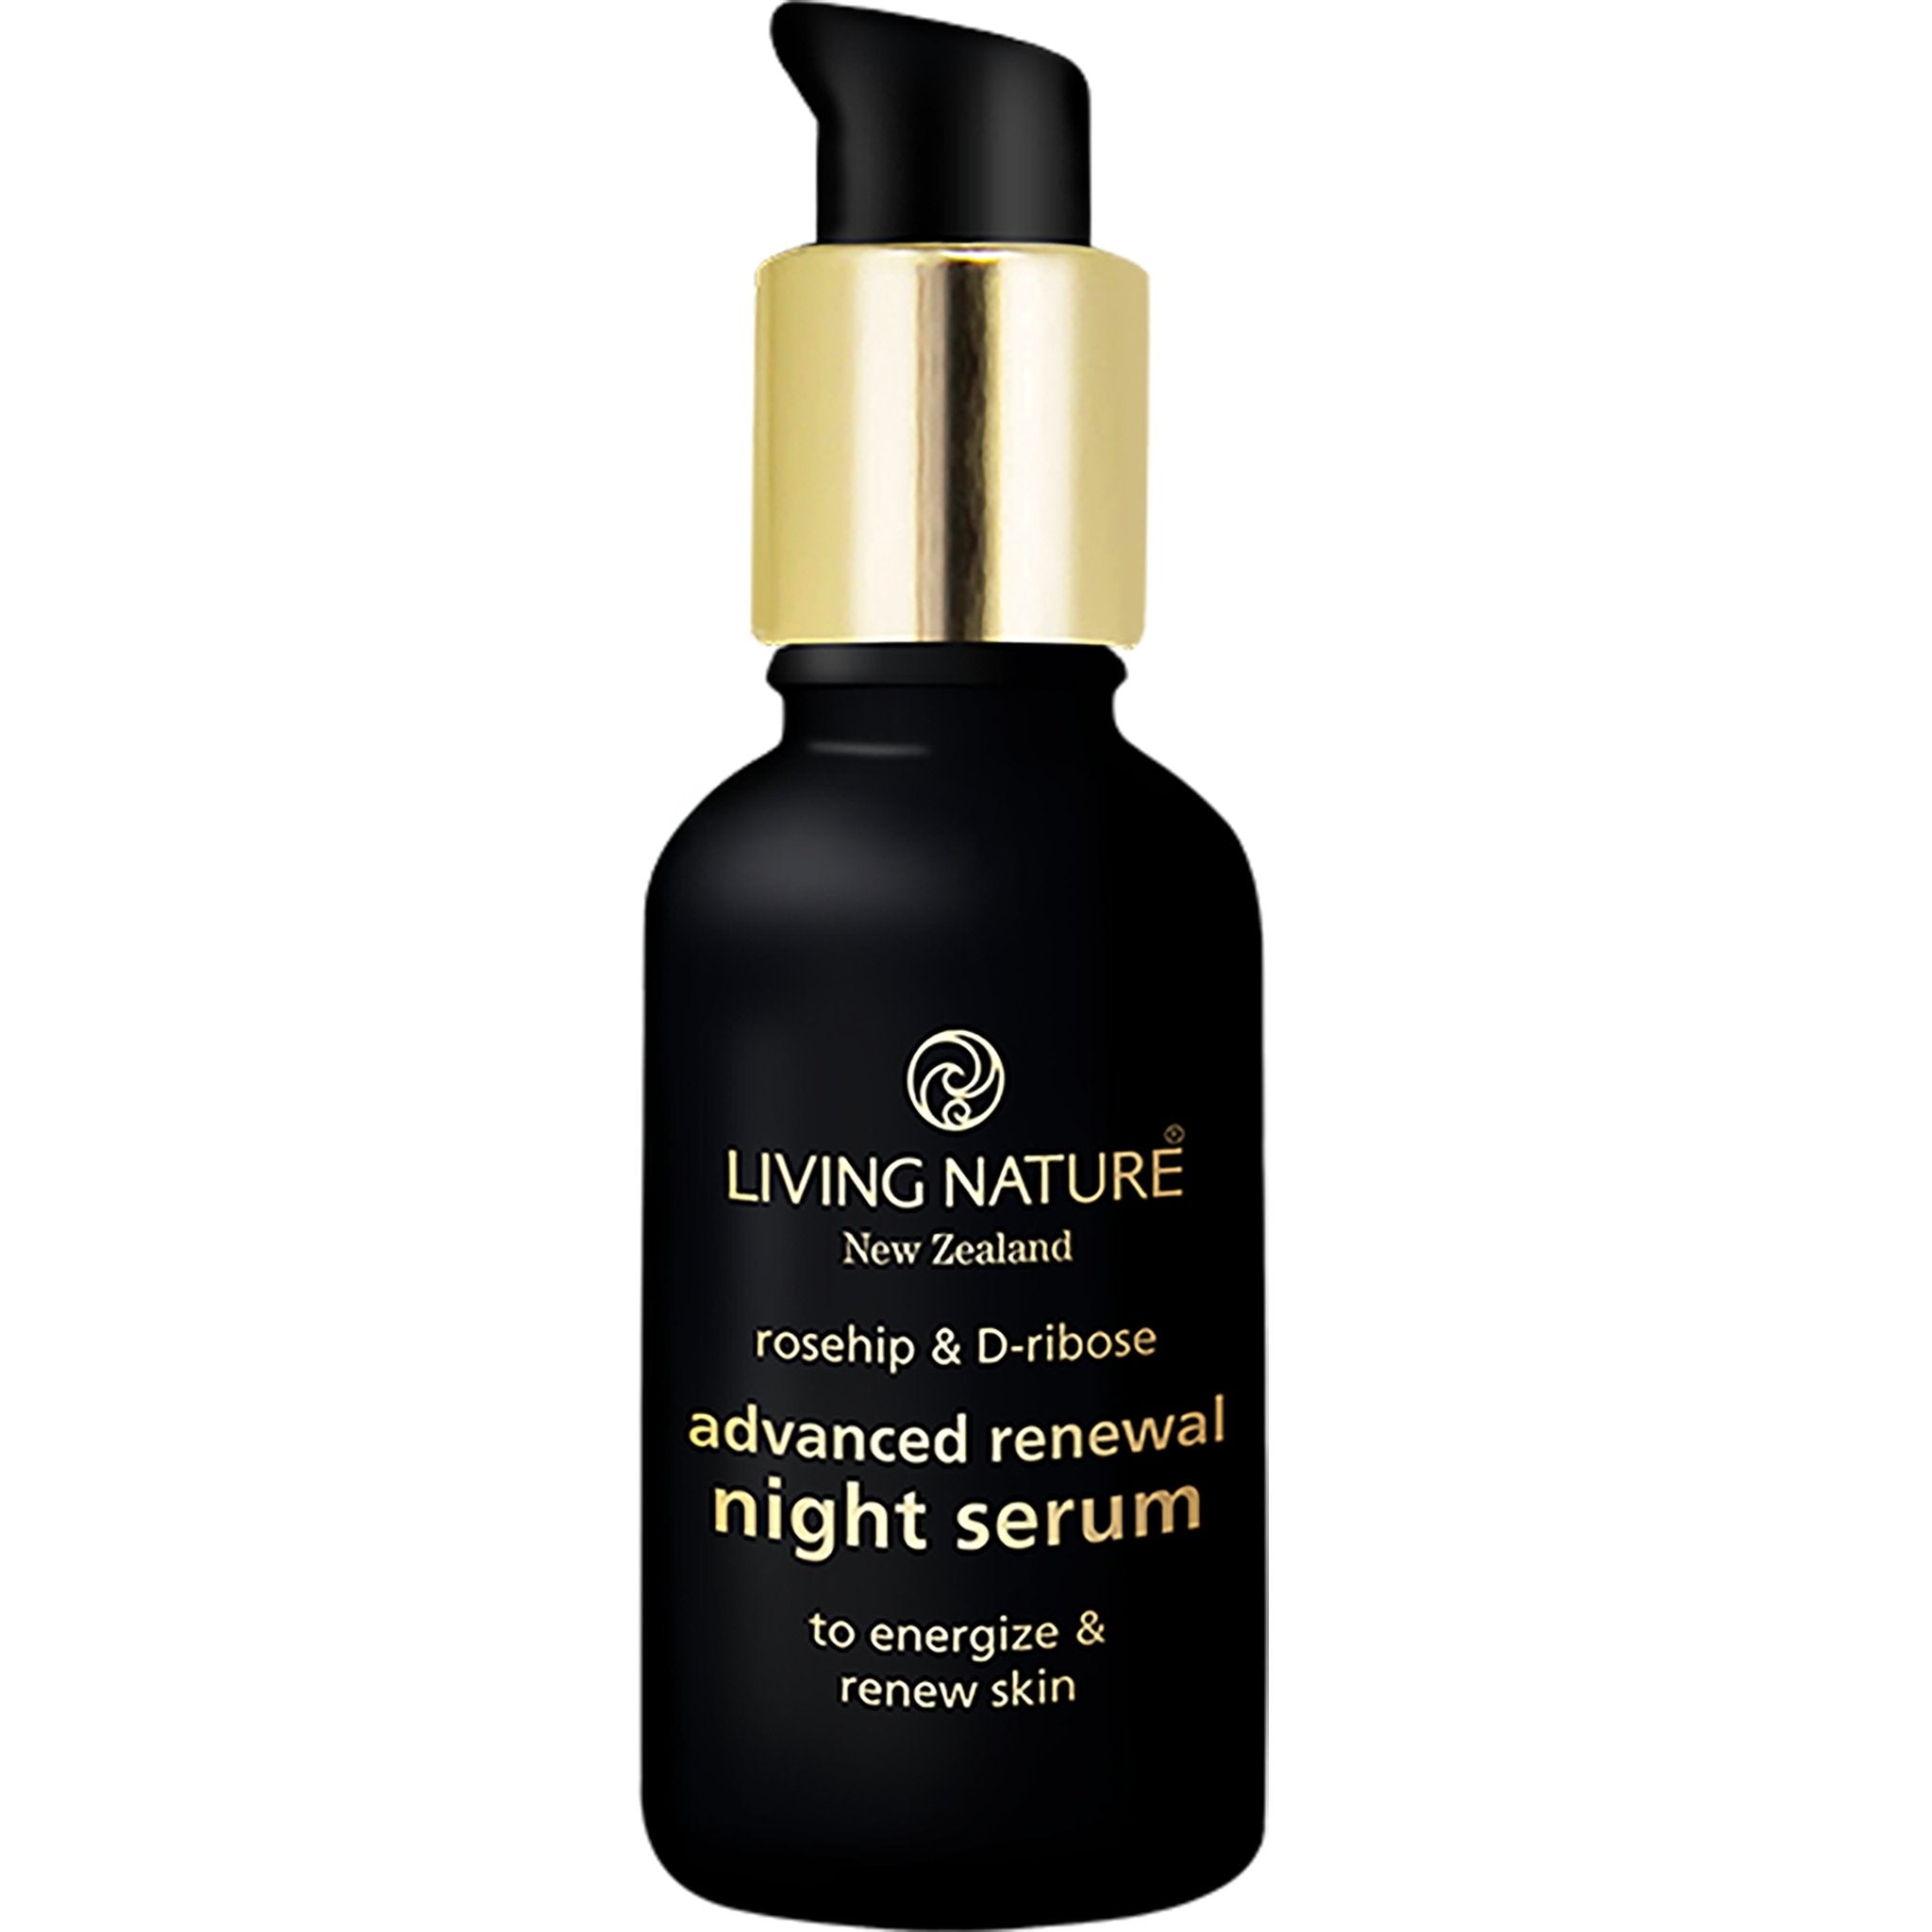 Advanced Renewal Night Serum - mypure.co.uk